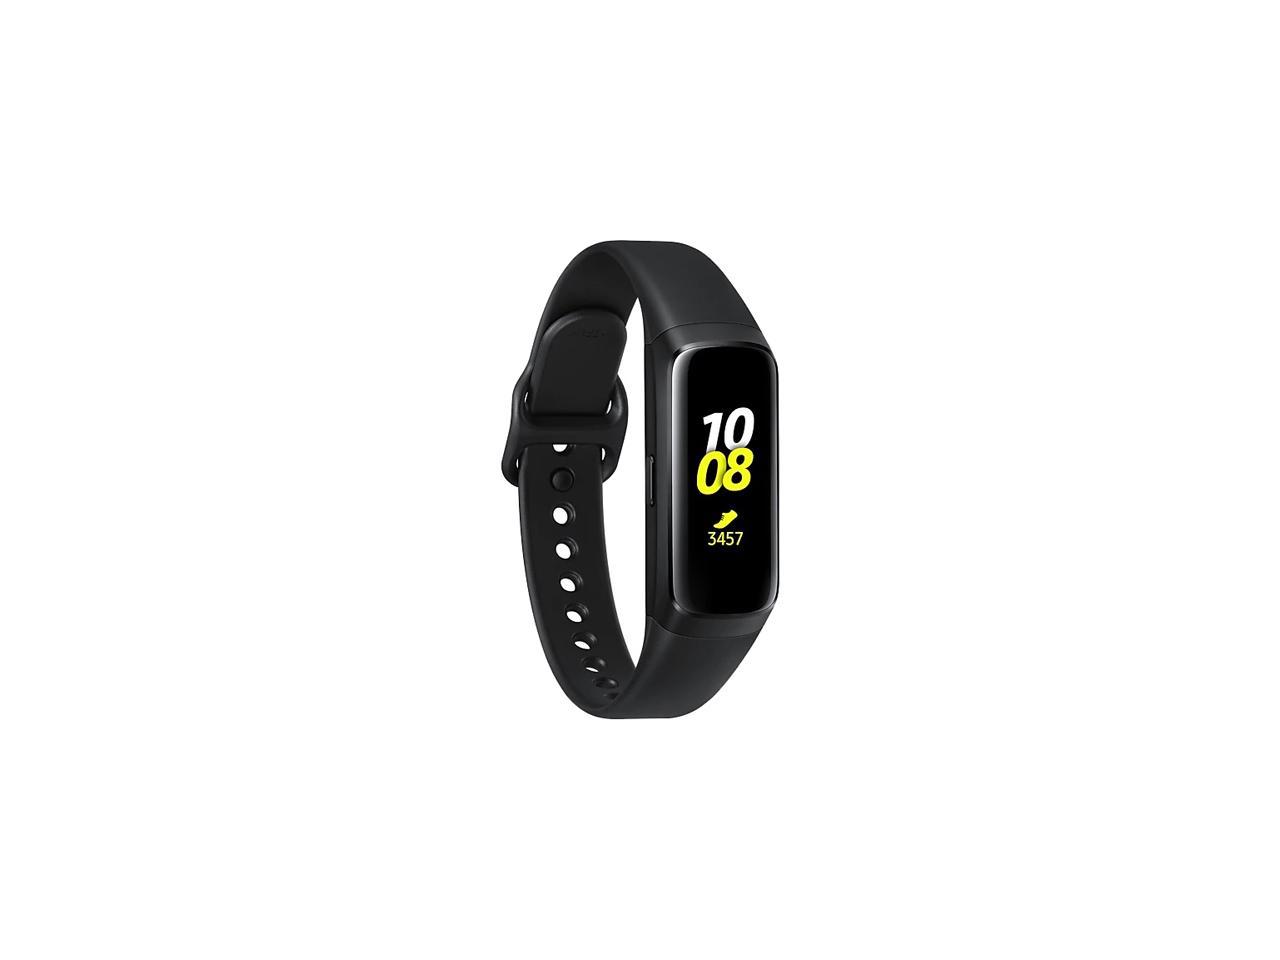 Samsung Galaxy Fit Smartwatch, Activity Tracker with Bluetooth - Black (SM-R370NZKAXAC)